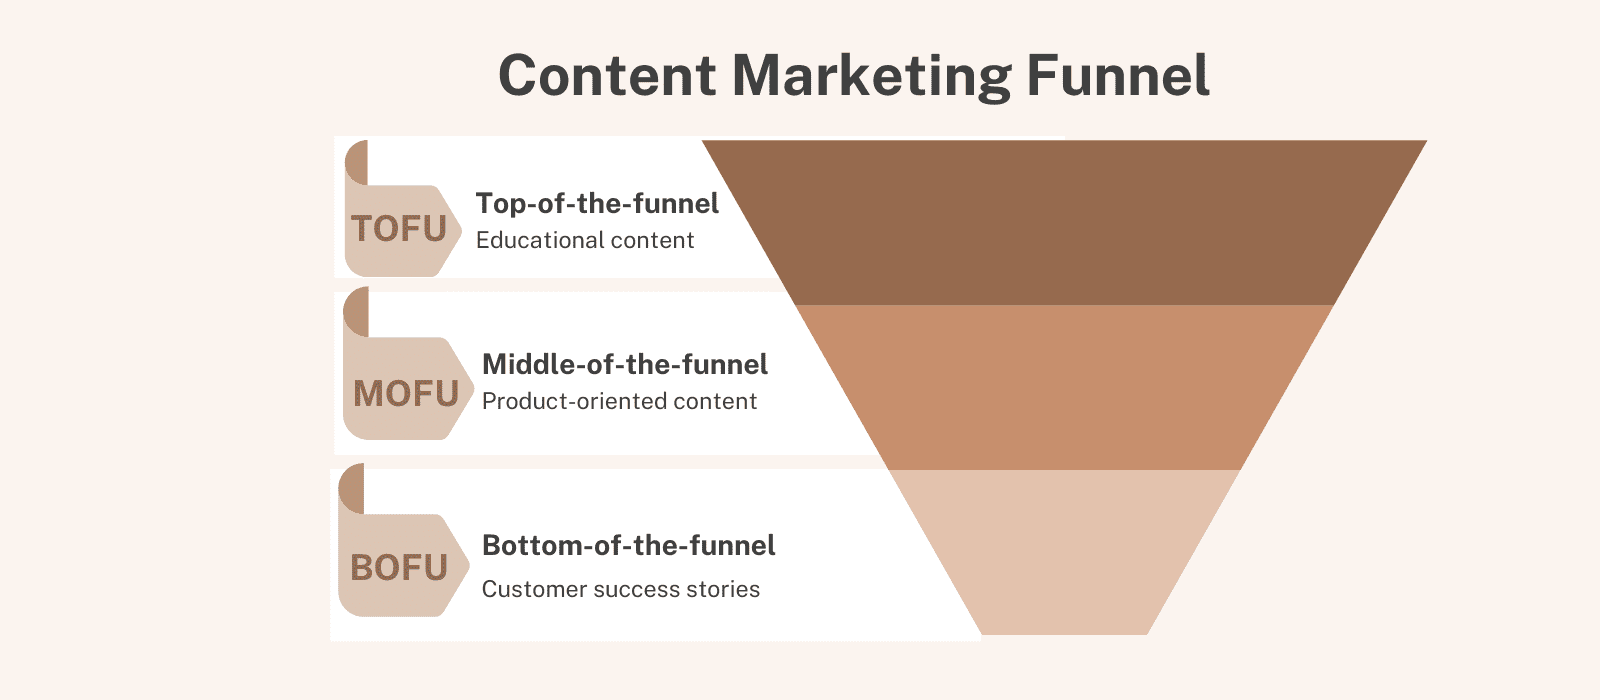 Content Marketing Funnel Illustration